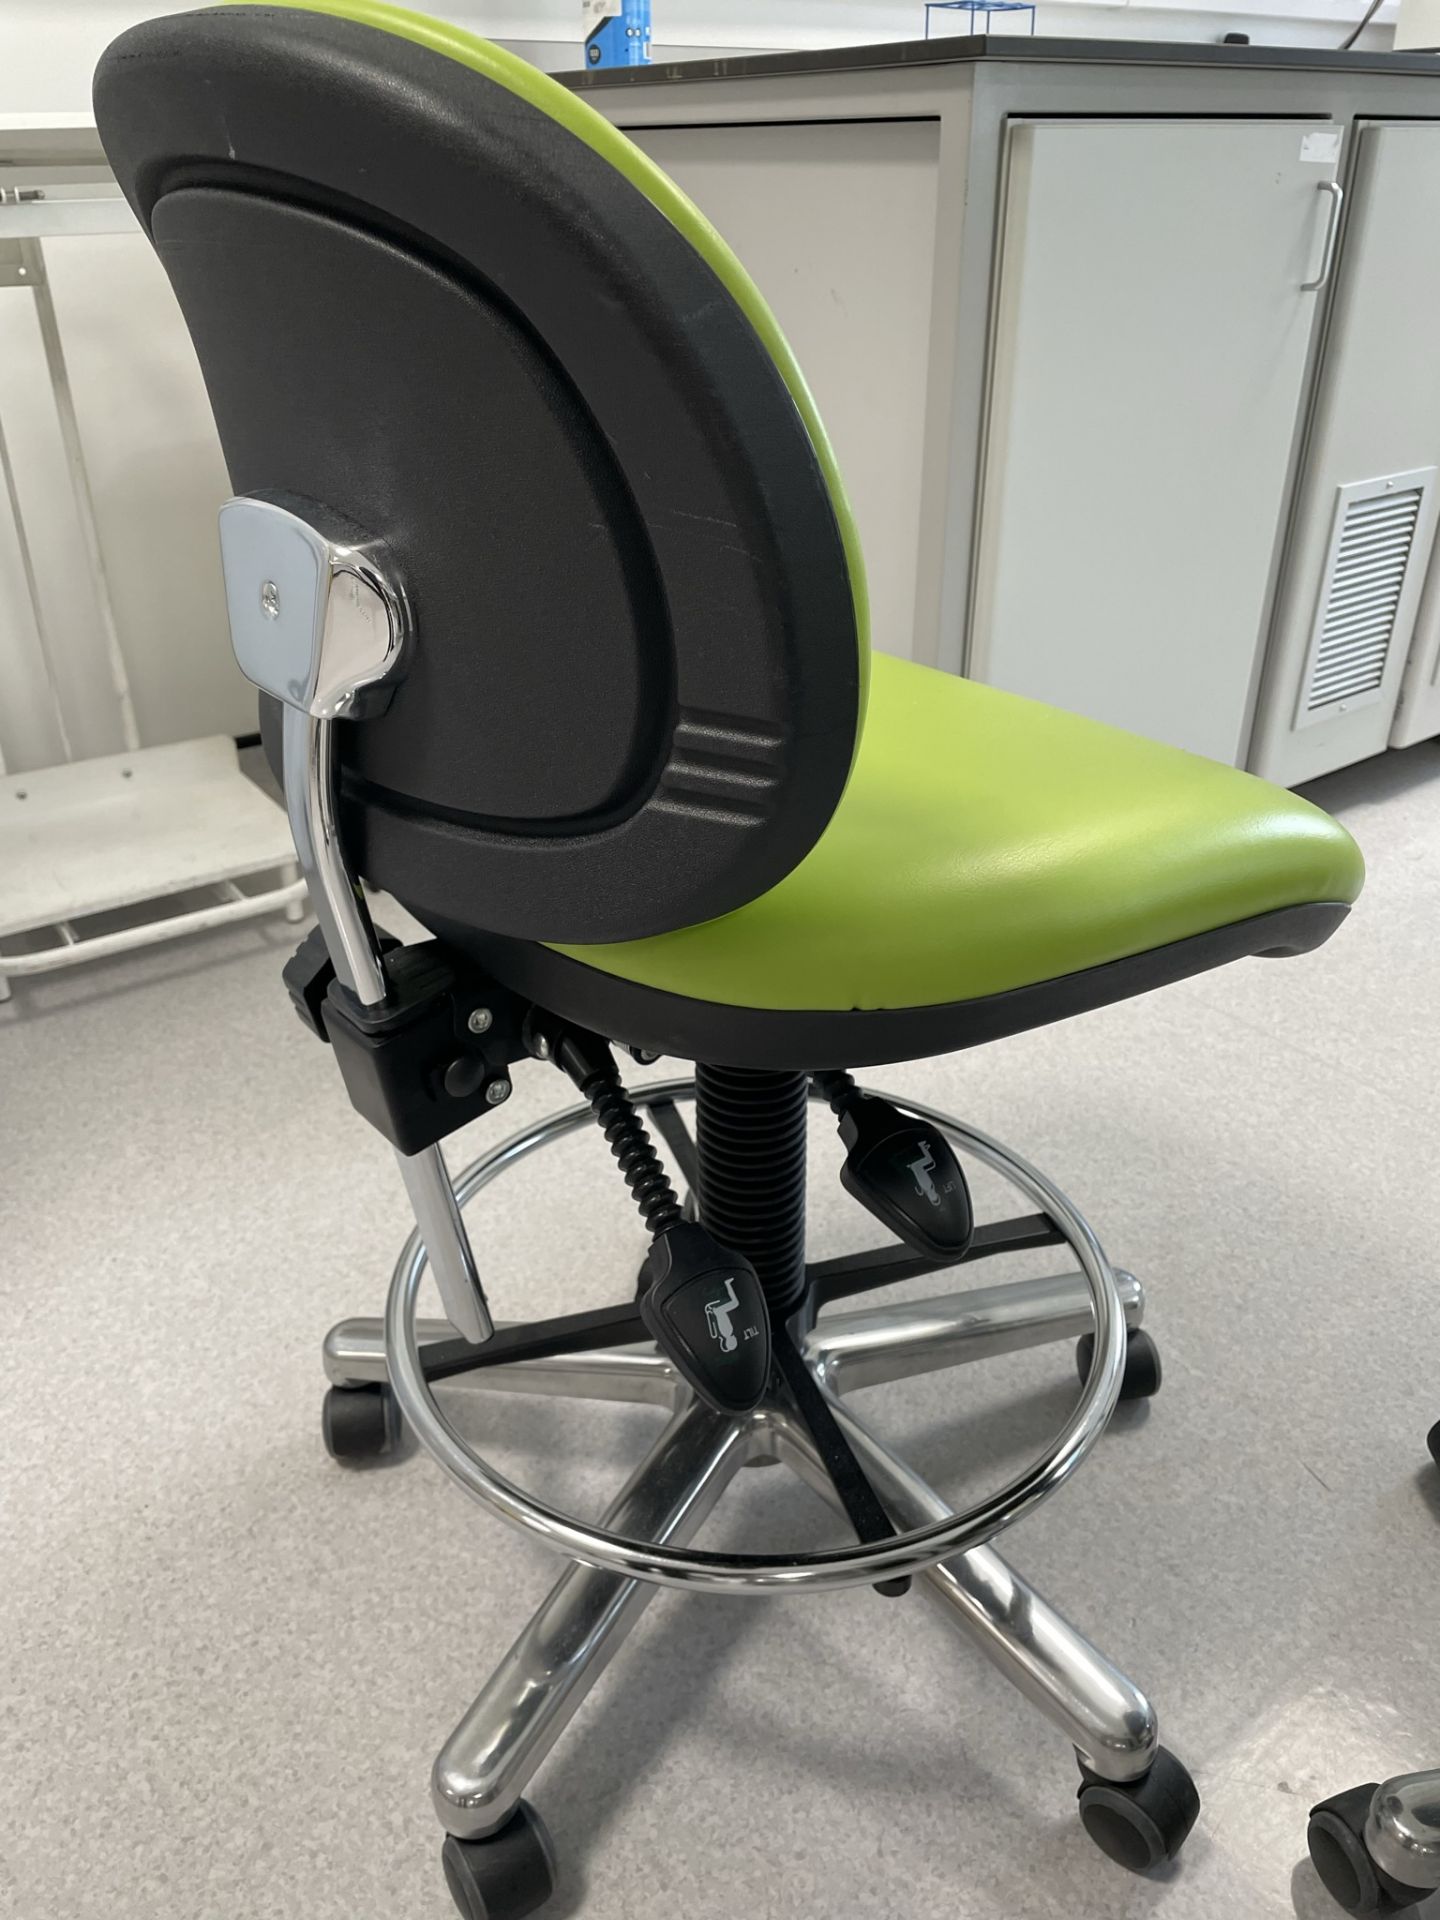 2 x Laboratory Adjustable Operator Chairs - Green - Image 2 of 2